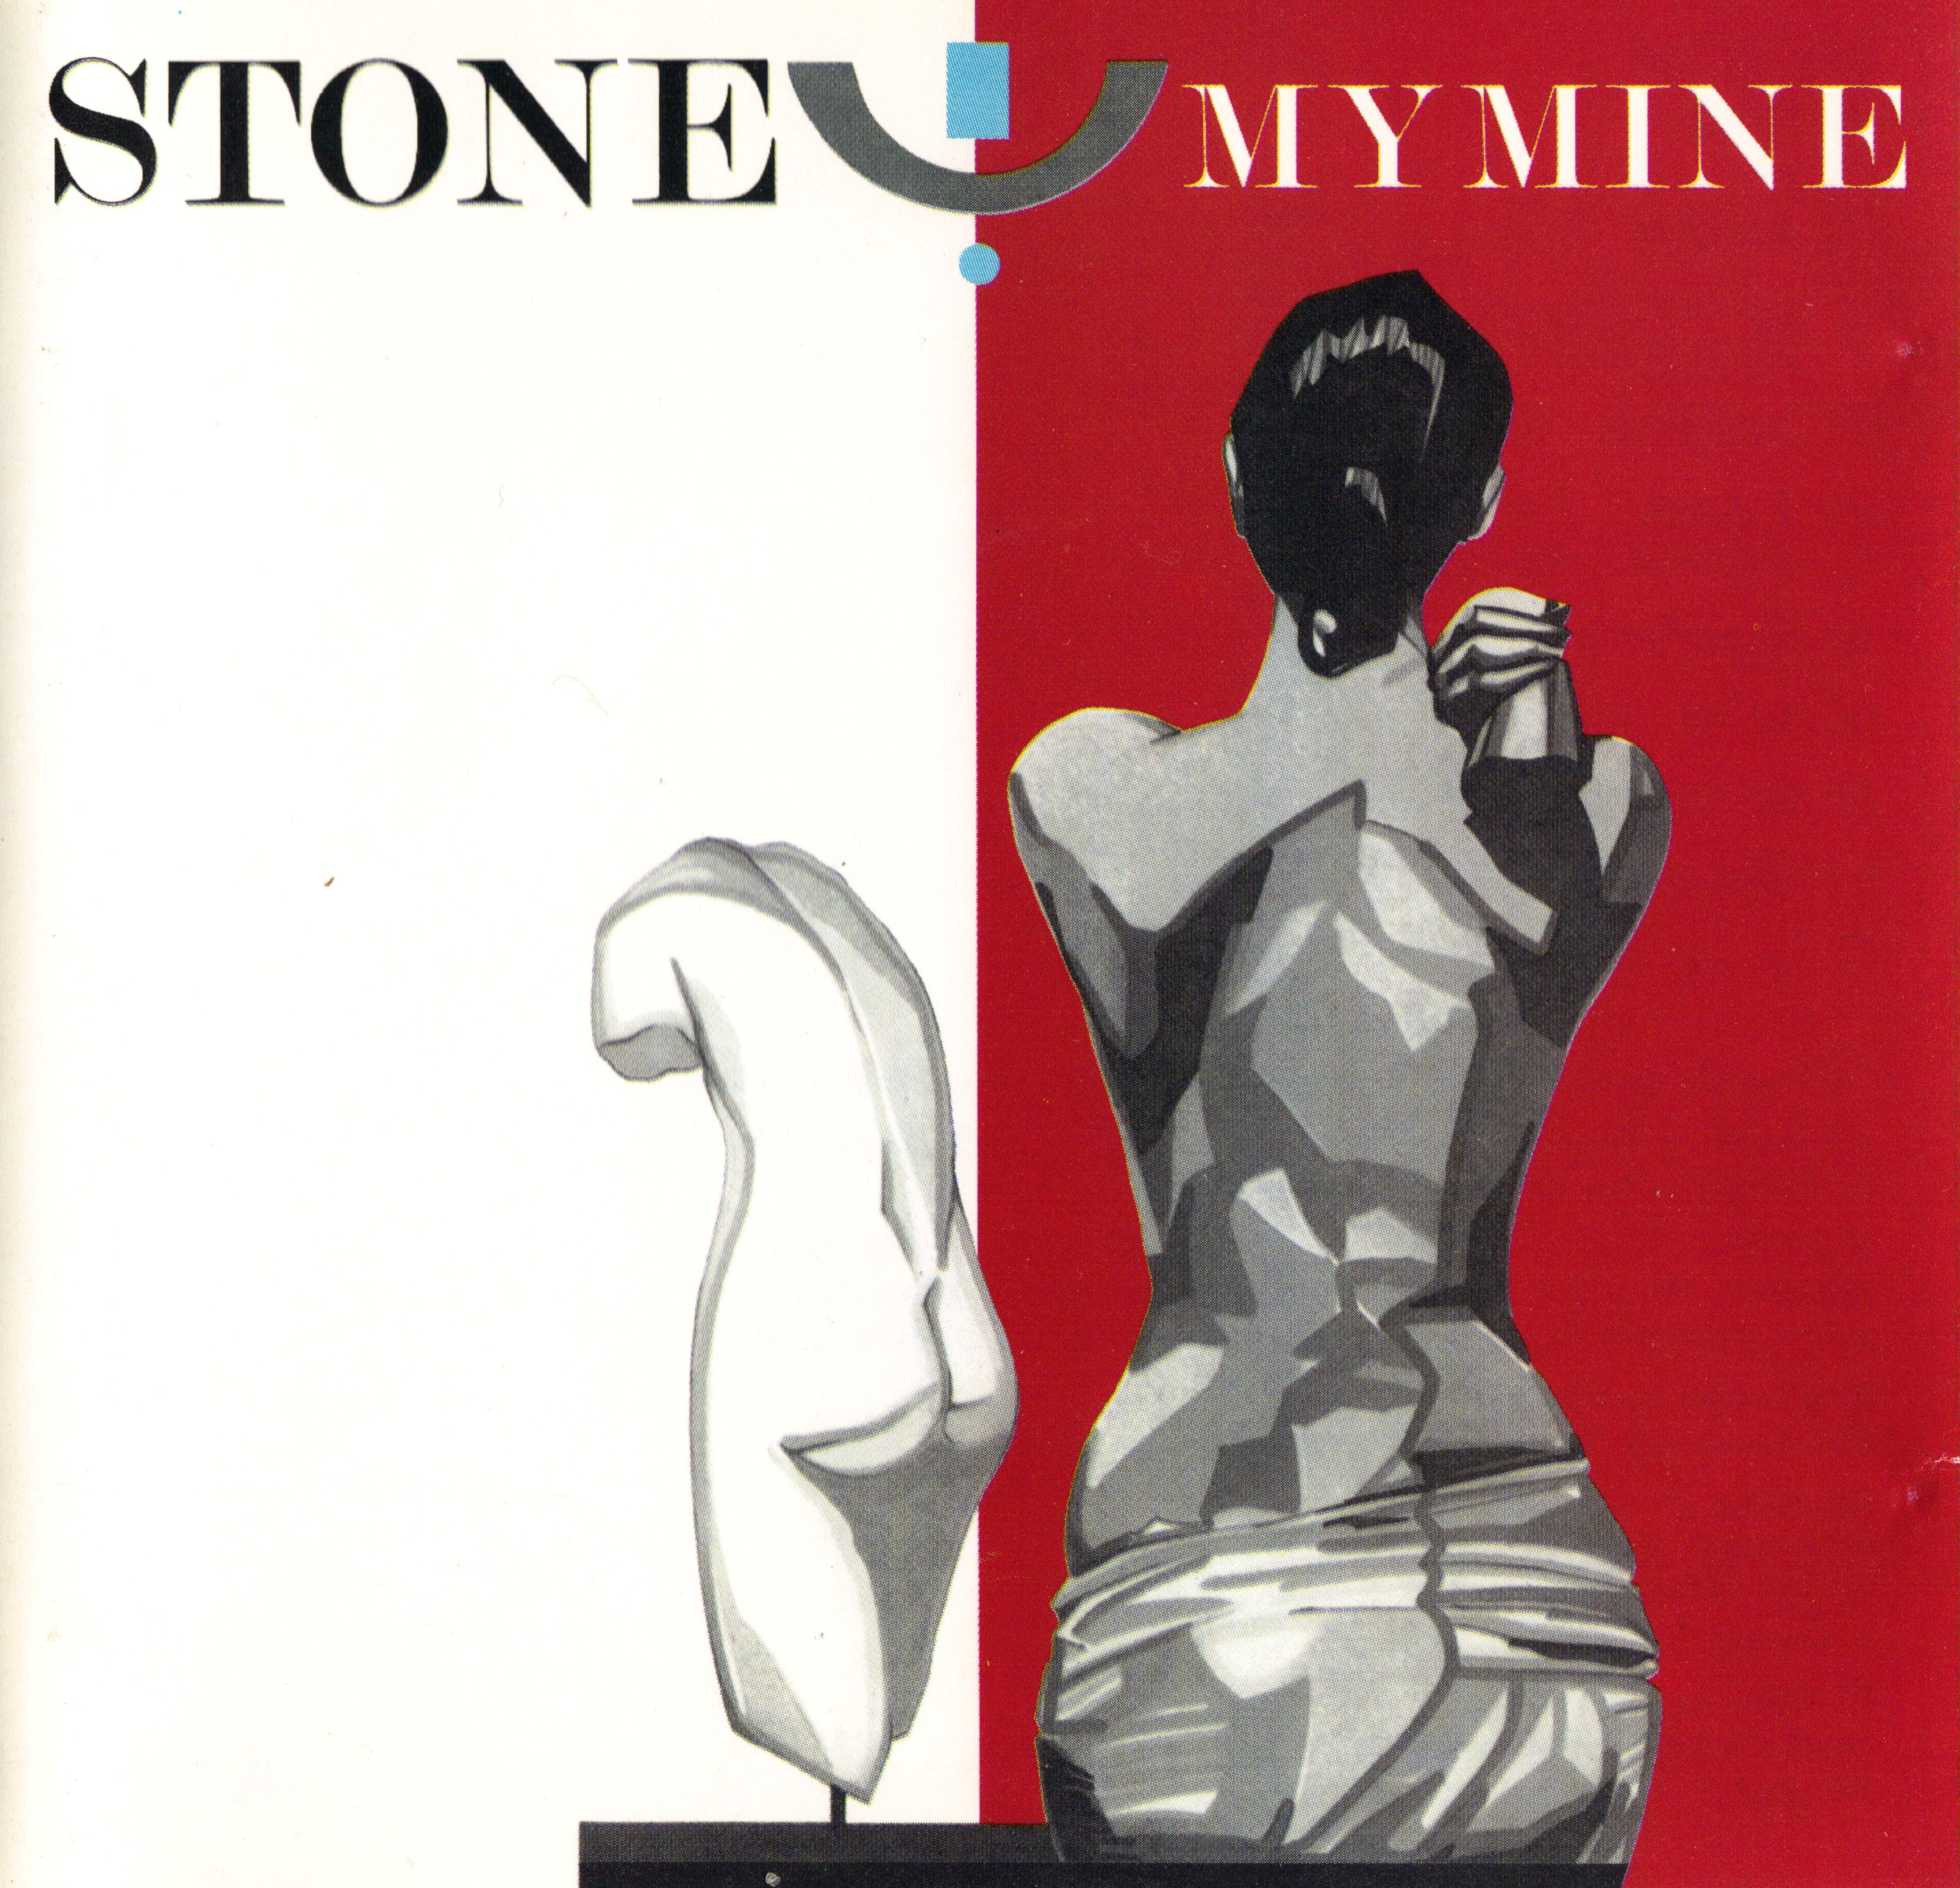 My mine mp 3. Stone mine. Gravestone 1985. My b mine. My albums.